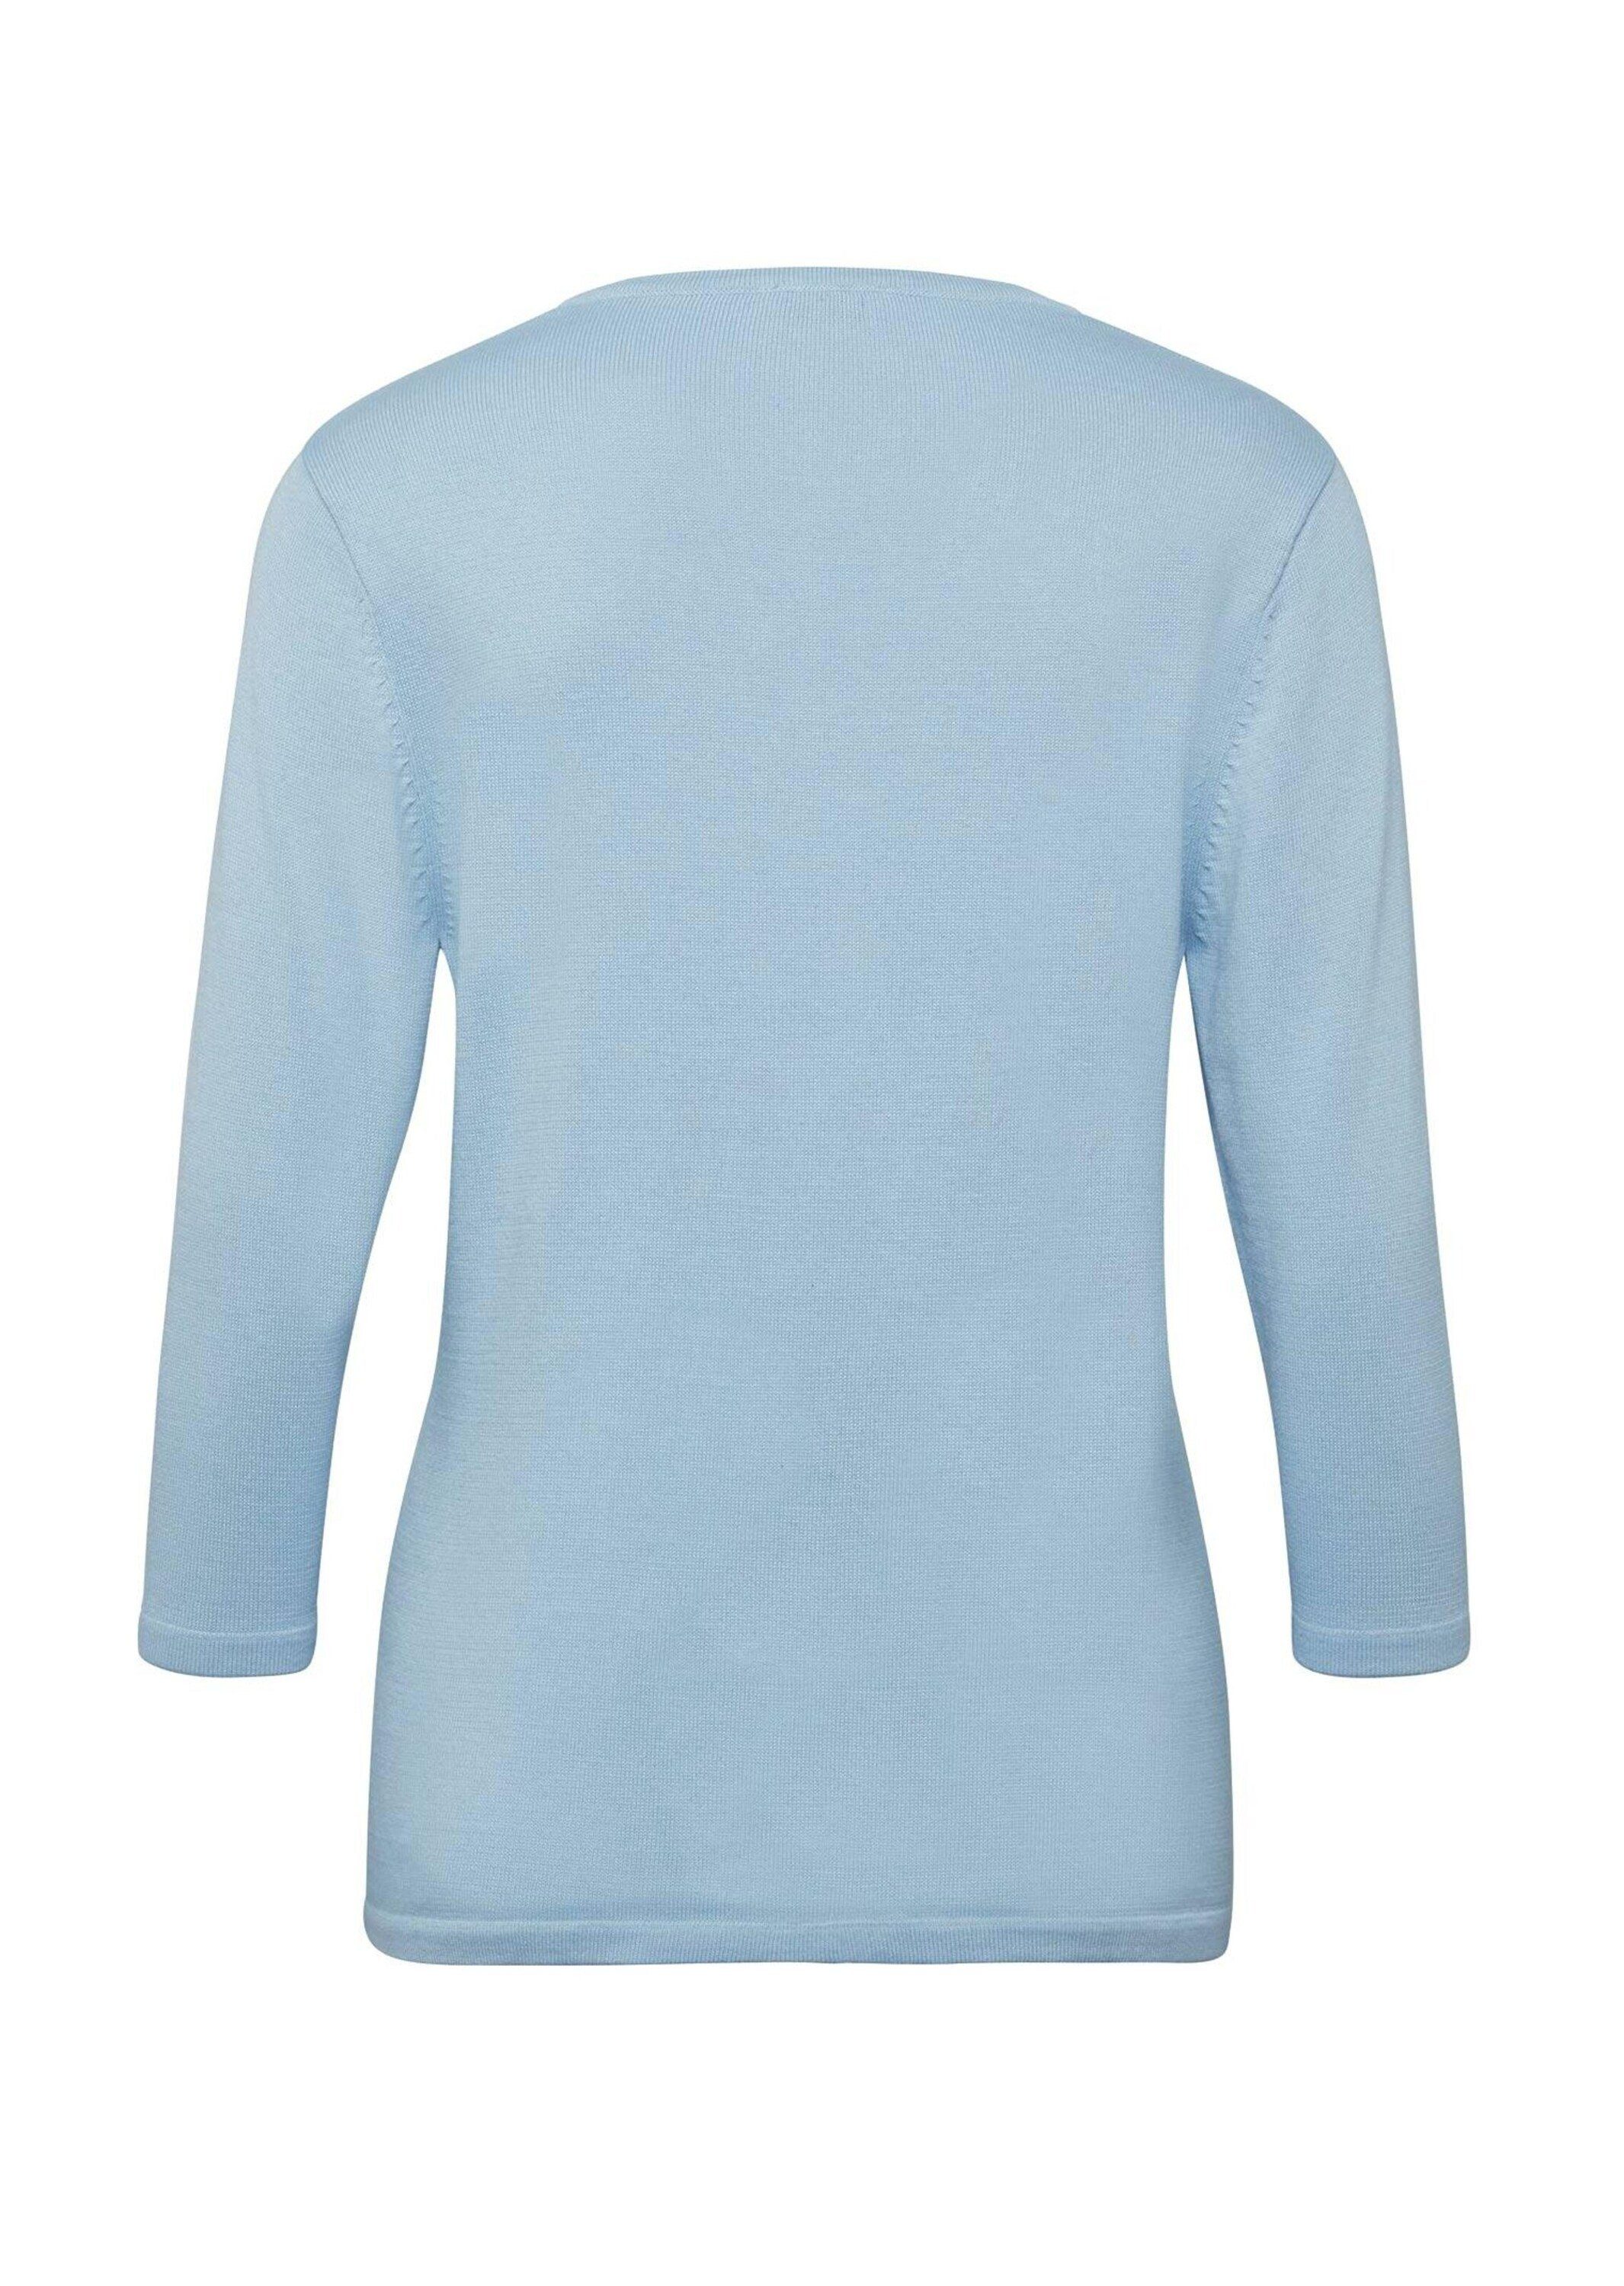 Pullover in GOLDNER hochwertiger Strickpullover Qualität himmelblau